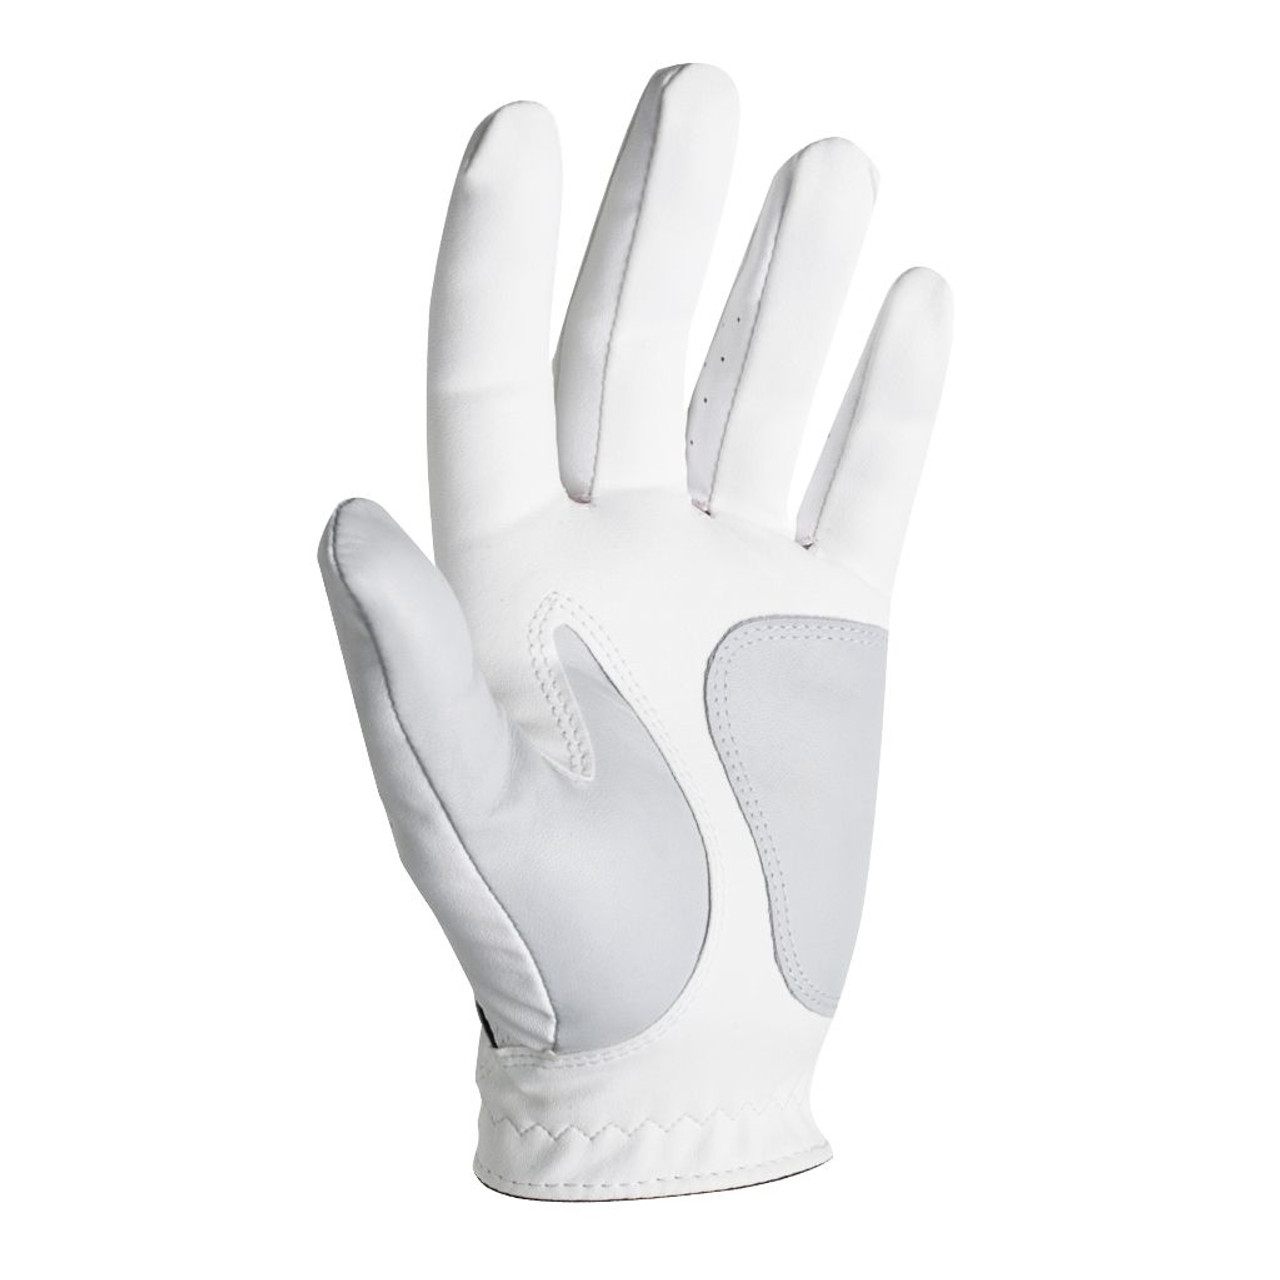 footjoy gloves sale